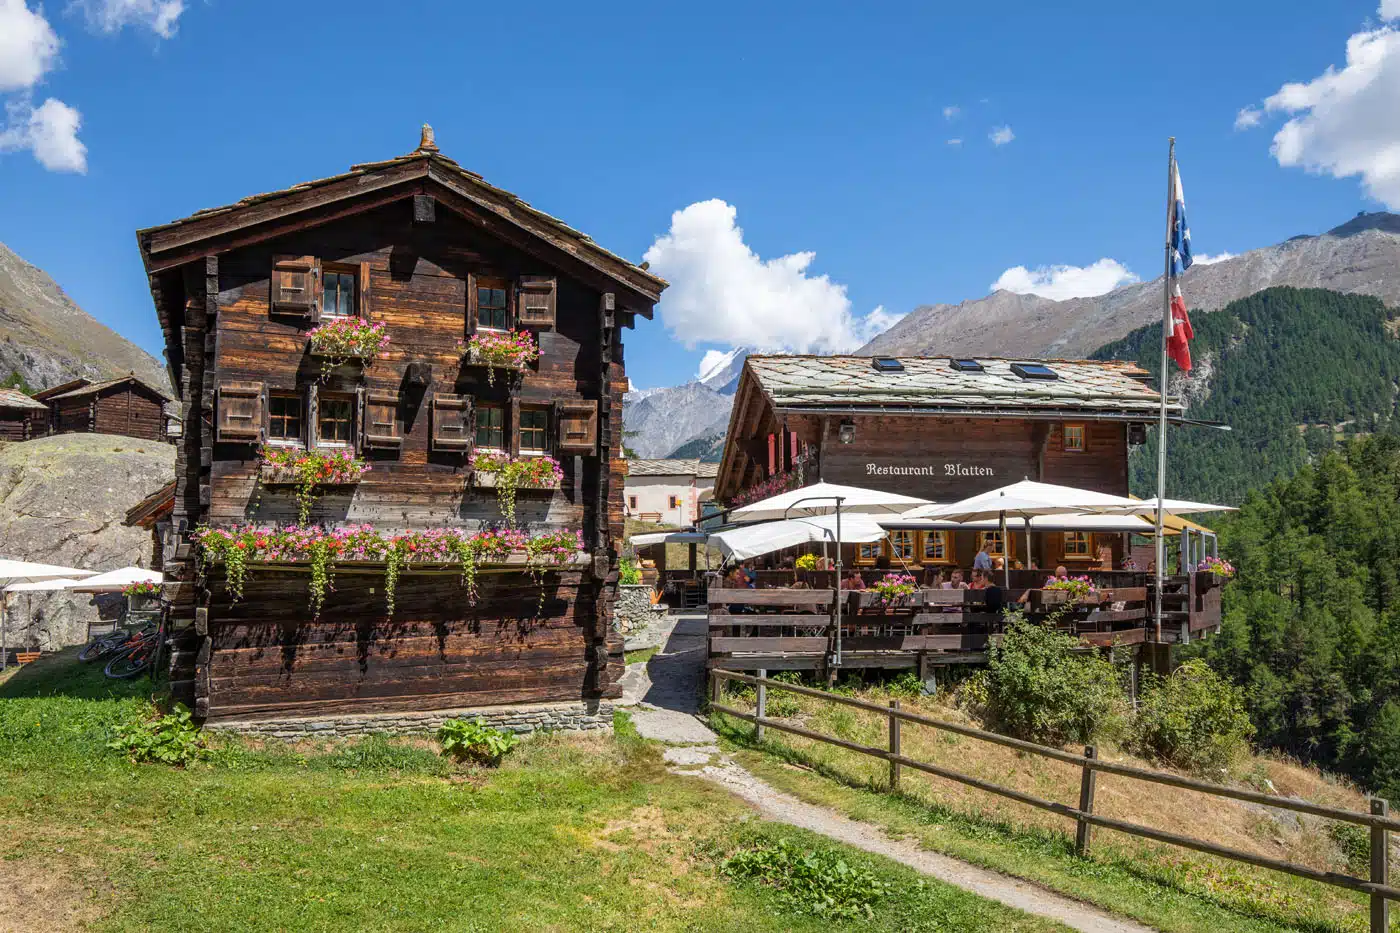 Restaurant Blatten | Best Hikes in Zermatt